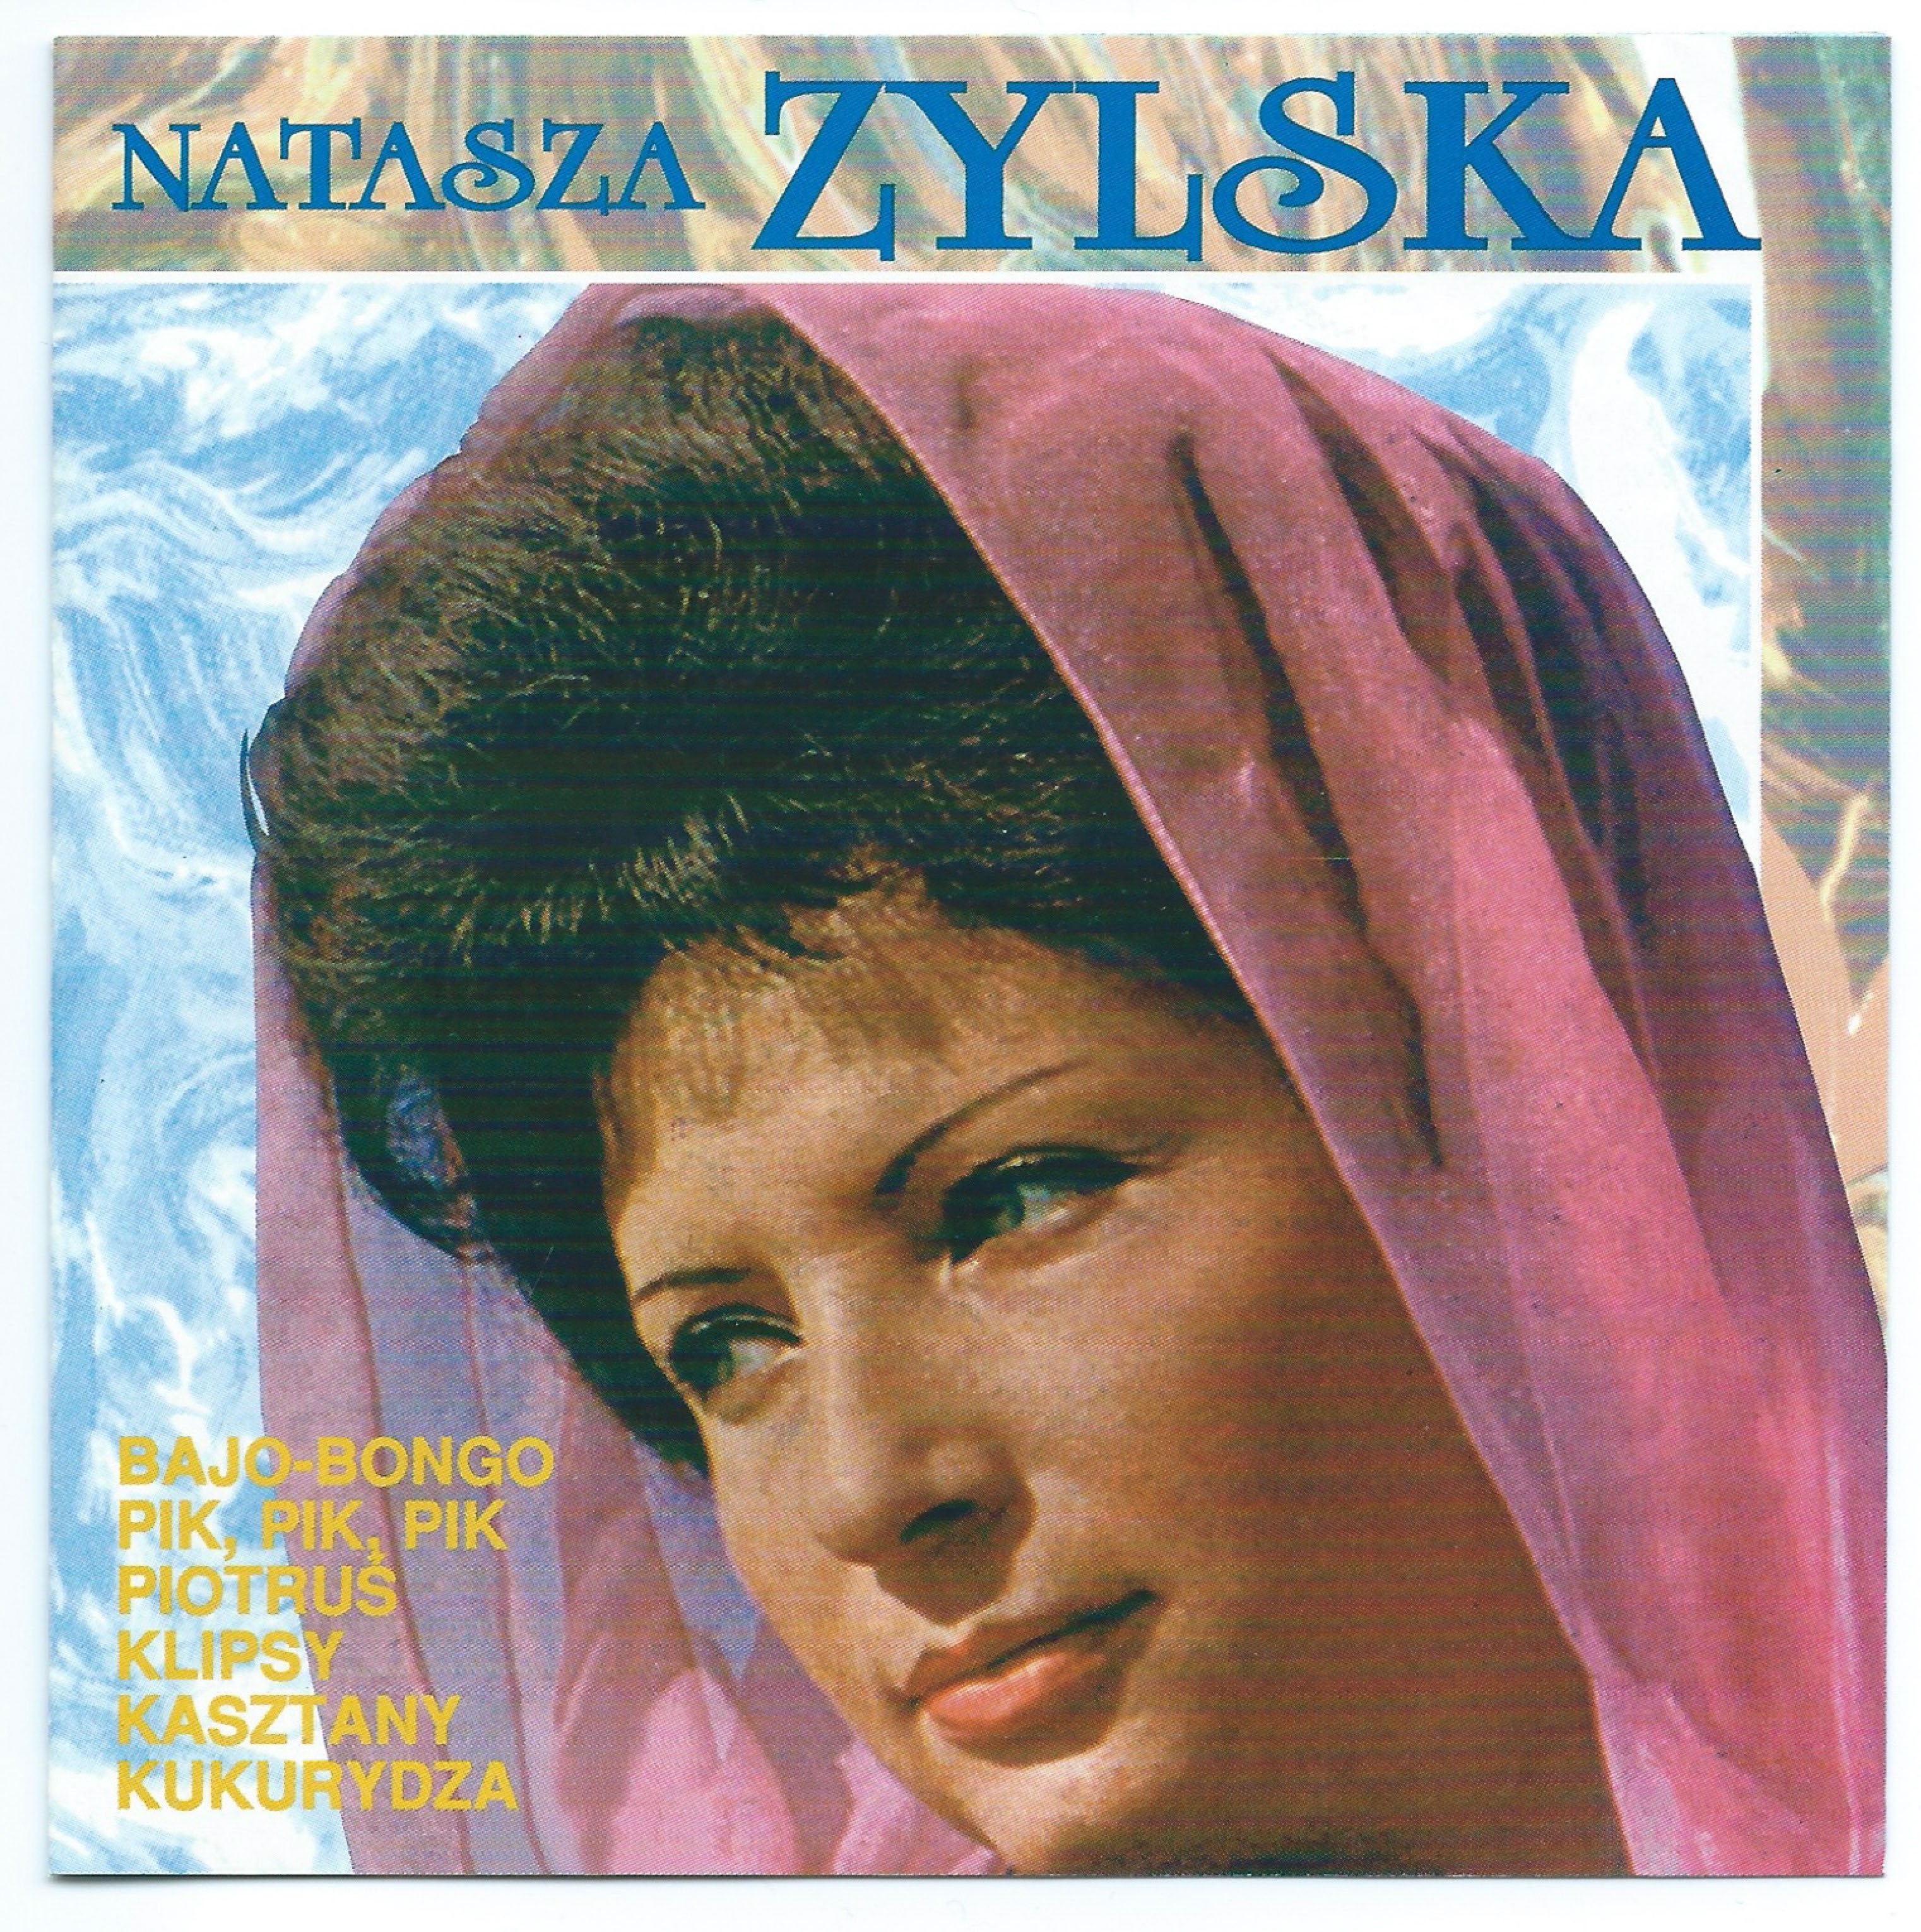 Natasza Zylska - Bajo Bongo